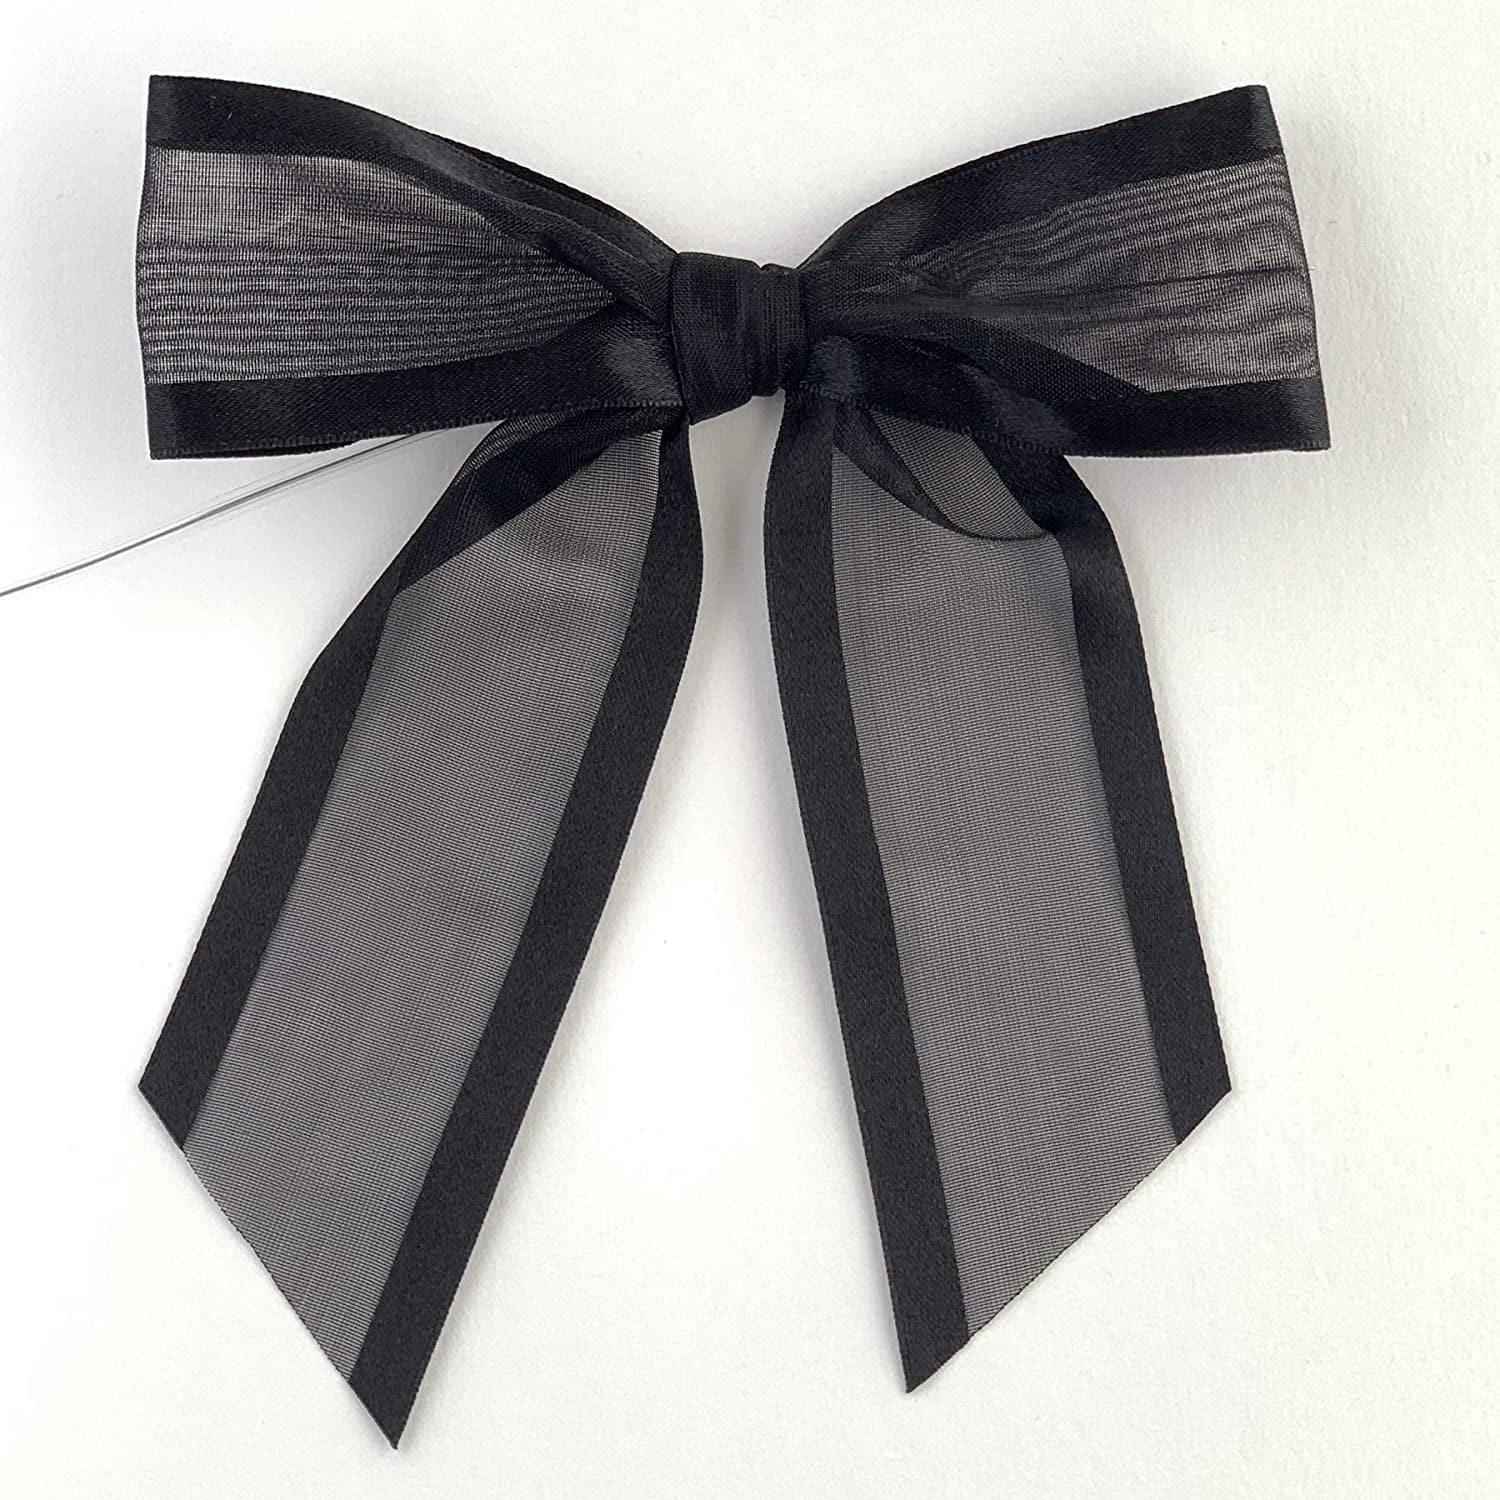 Pre-Tied Black Organza Bows - 4 1/2 Wide, Set of 12, Craft Ribbon Bow,  Satin Edge, Wedding Embellishments, Christmas, Gift Basket, Wreath,  Birthday, Party Favors 